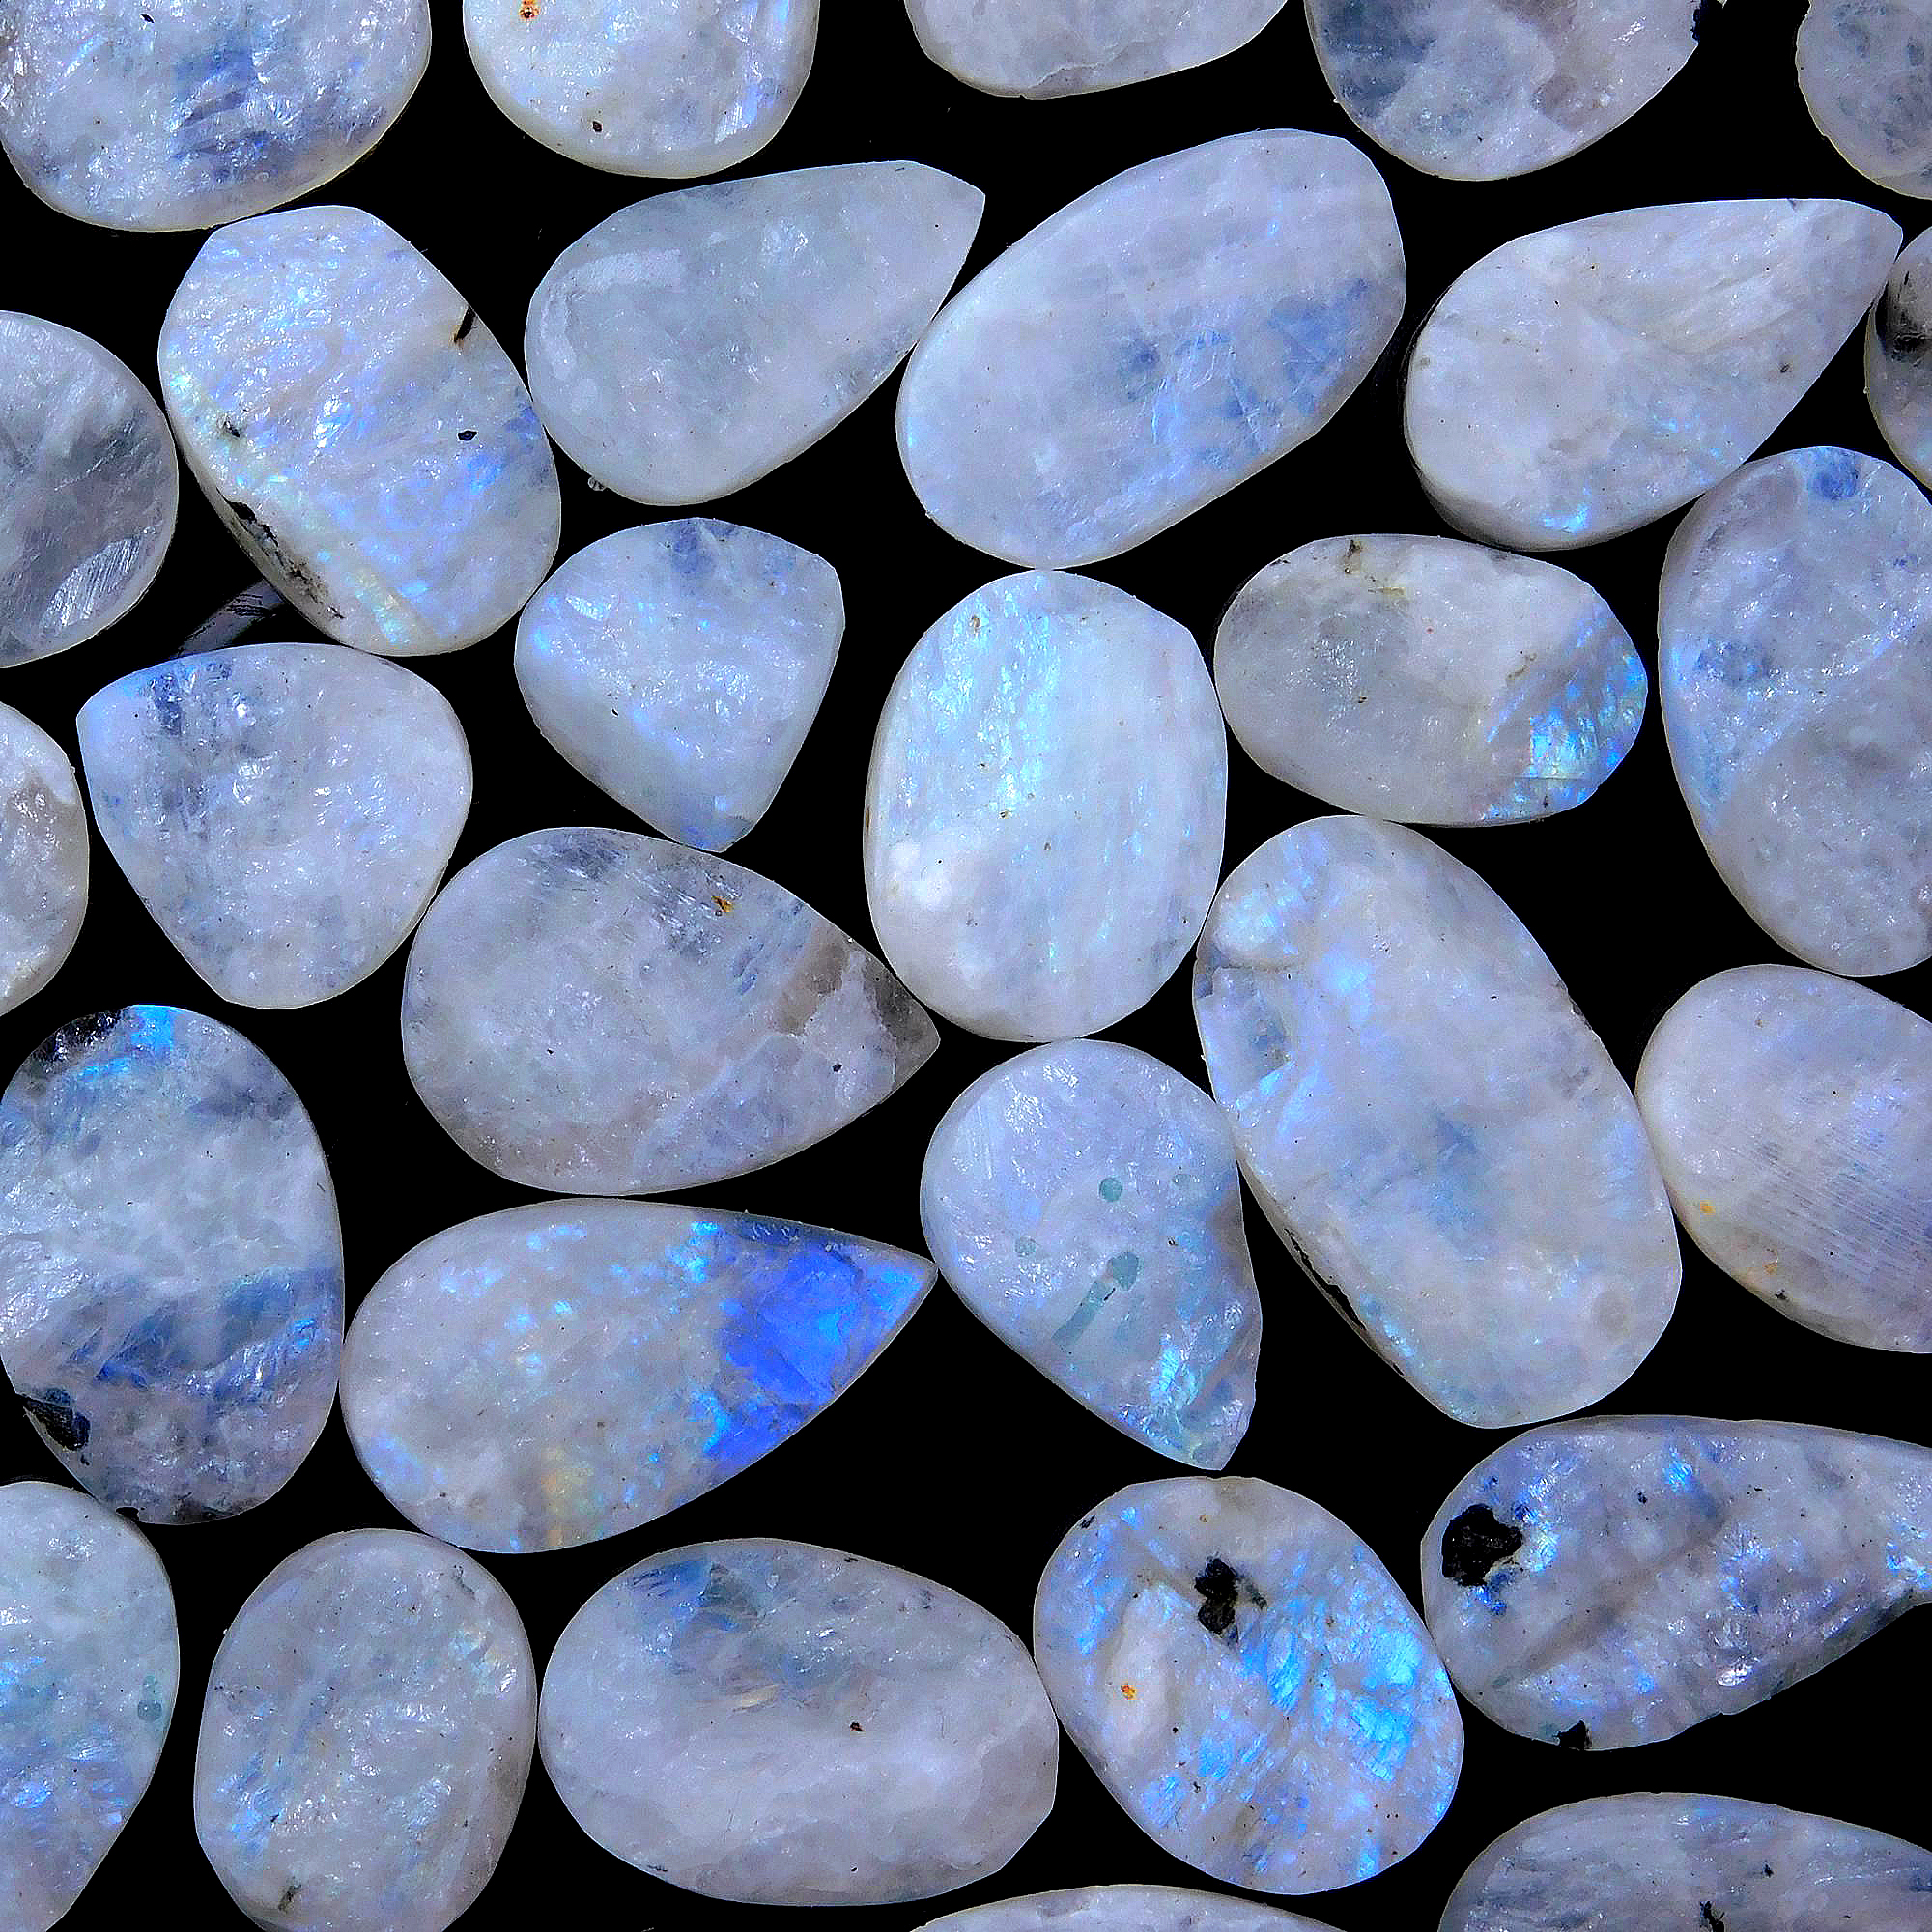 40 Pcs Natural Moonstone Druzy 632cts Unpolished Rough Loose Gemstone Wholesale Lot Size 27x15 14x14mm